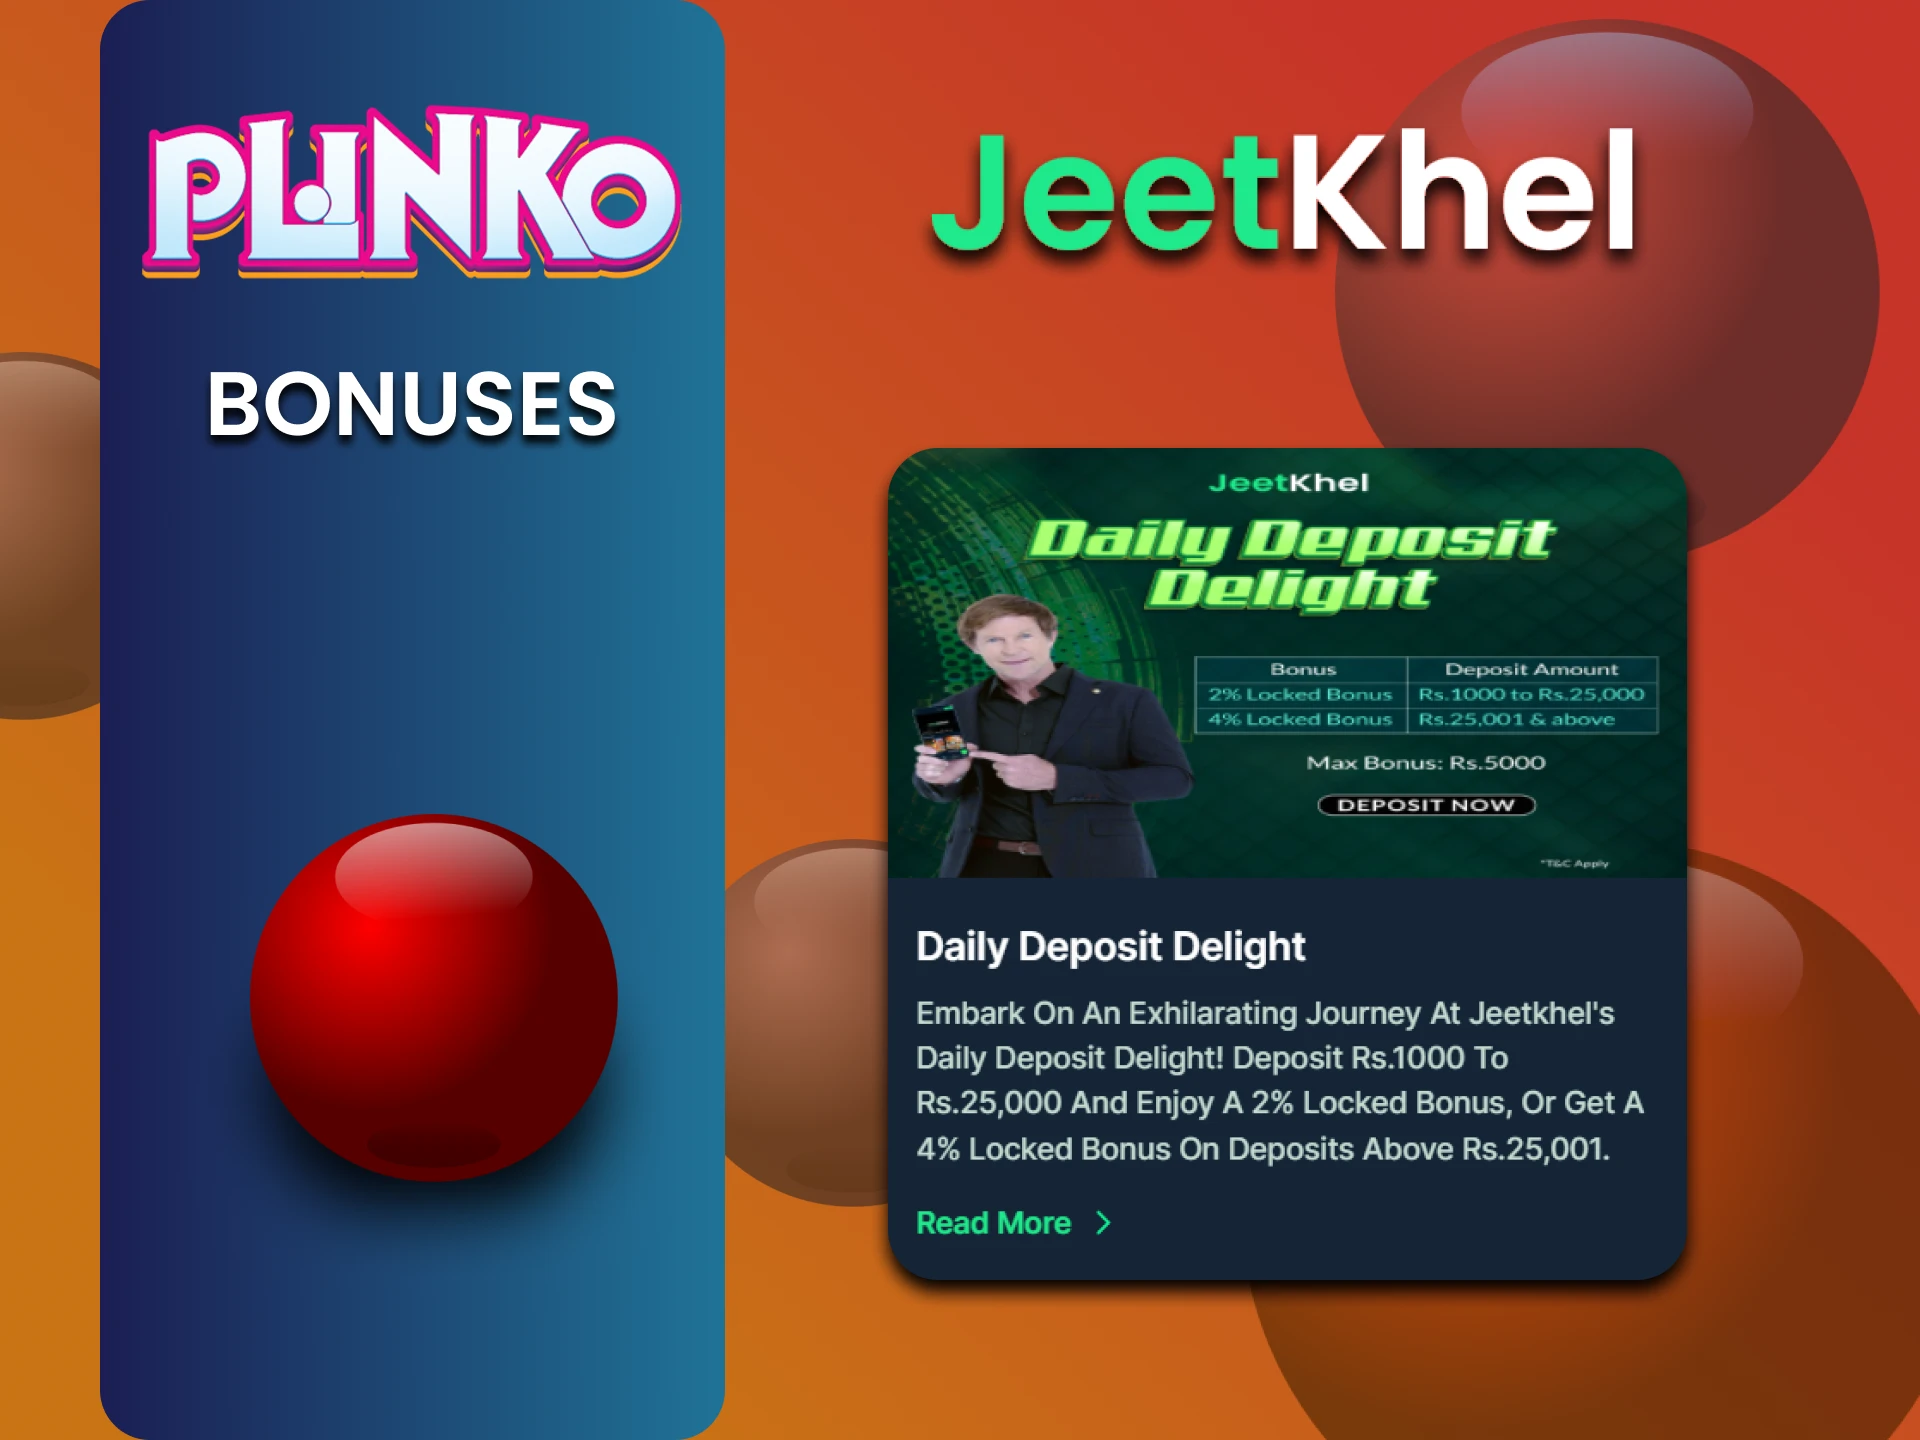 JeetKhel gives bonuses for playing Plinko.